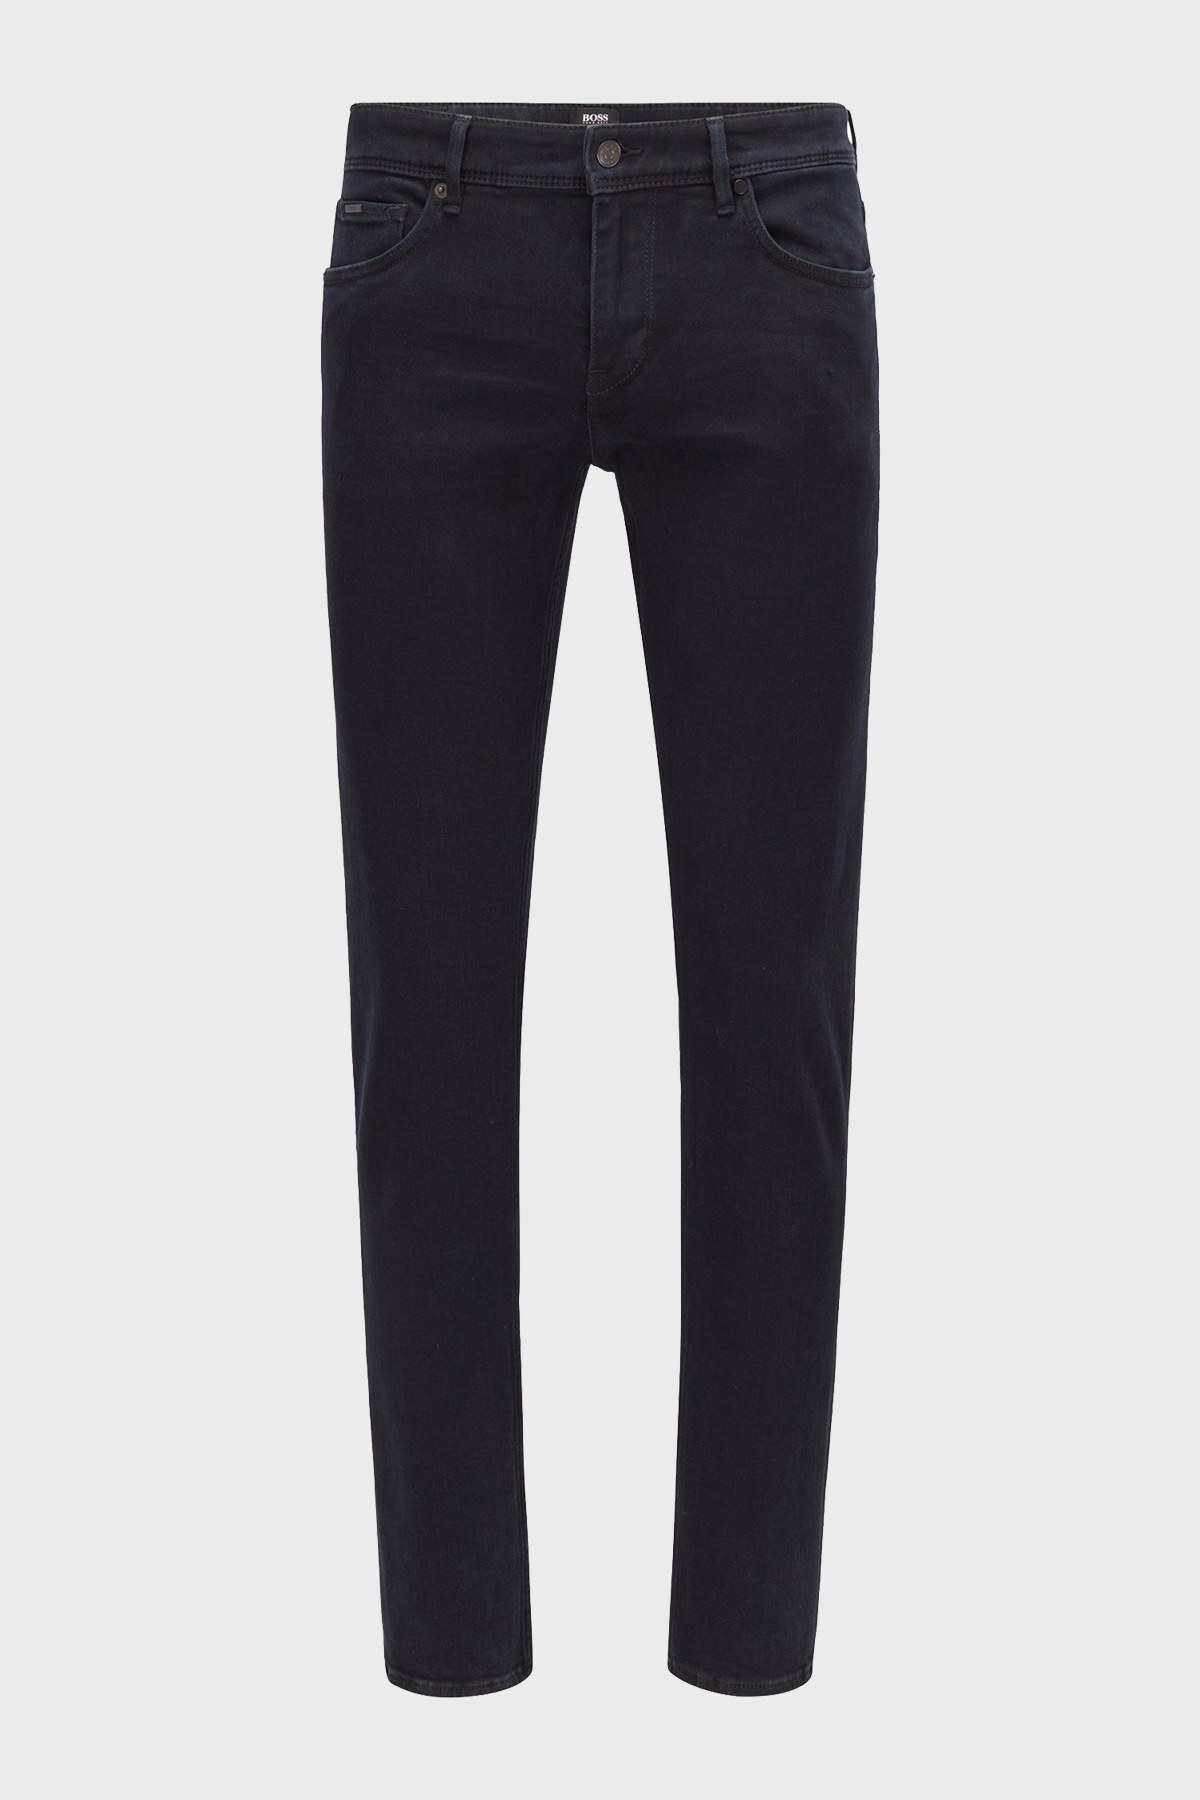 Hugo Boss Düşük Bel Extra Slim Fit Cepli Pamuklu Jeans Erkek Kot Pantolon 50458143 400 LACİVERT